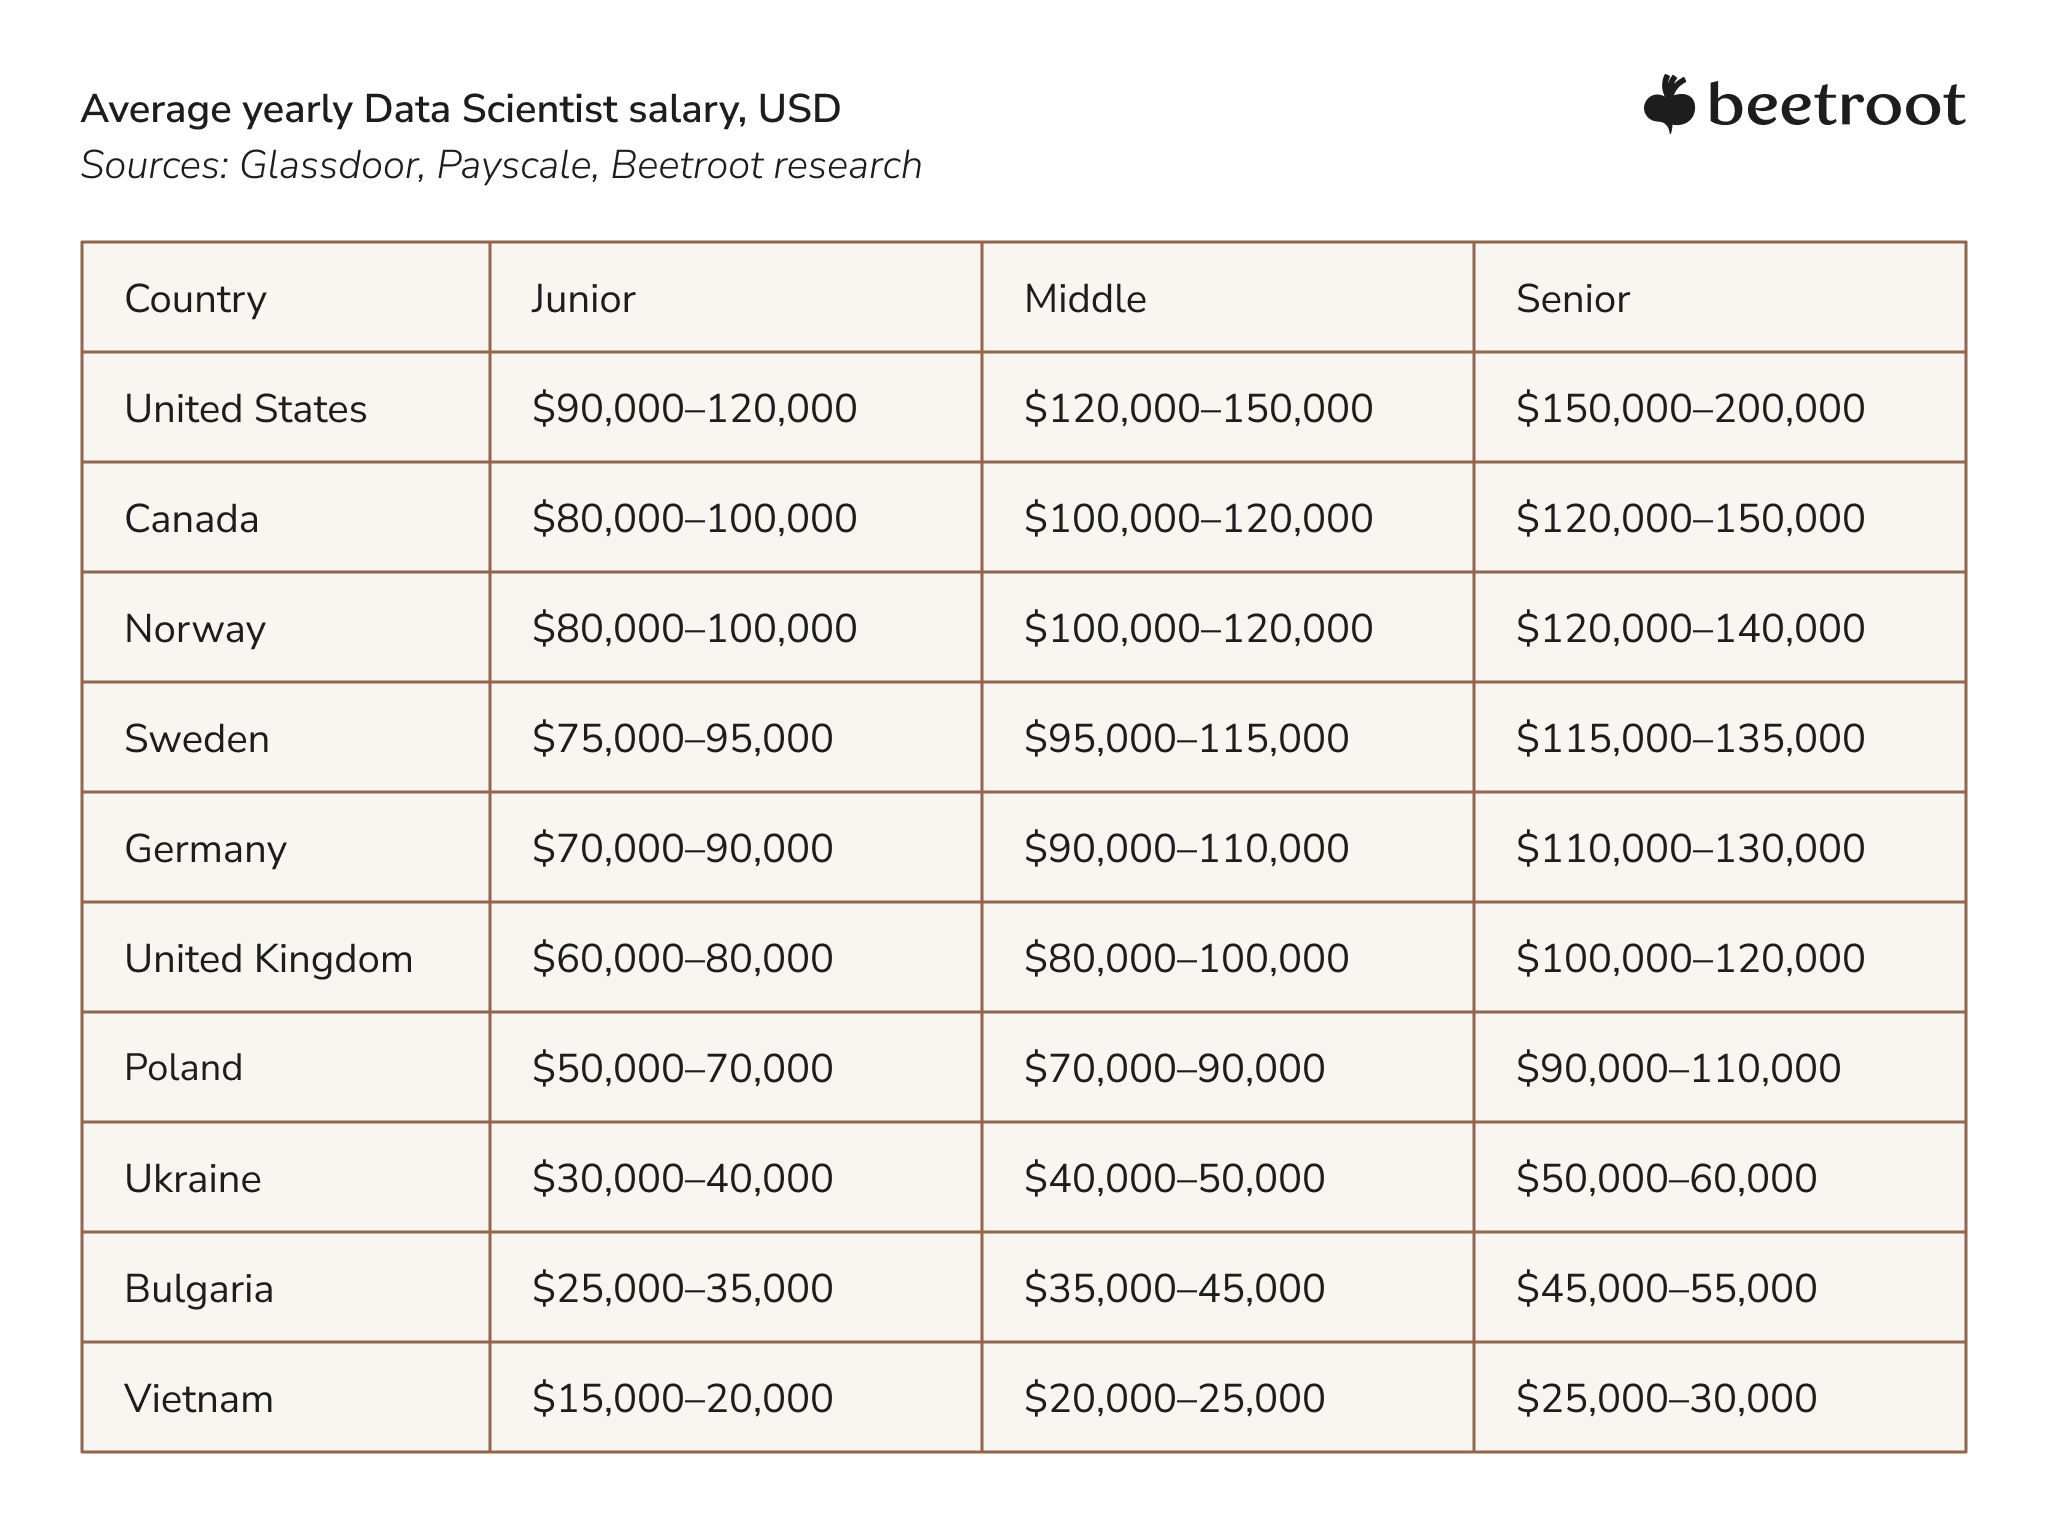 Data Scientist Salary, USD